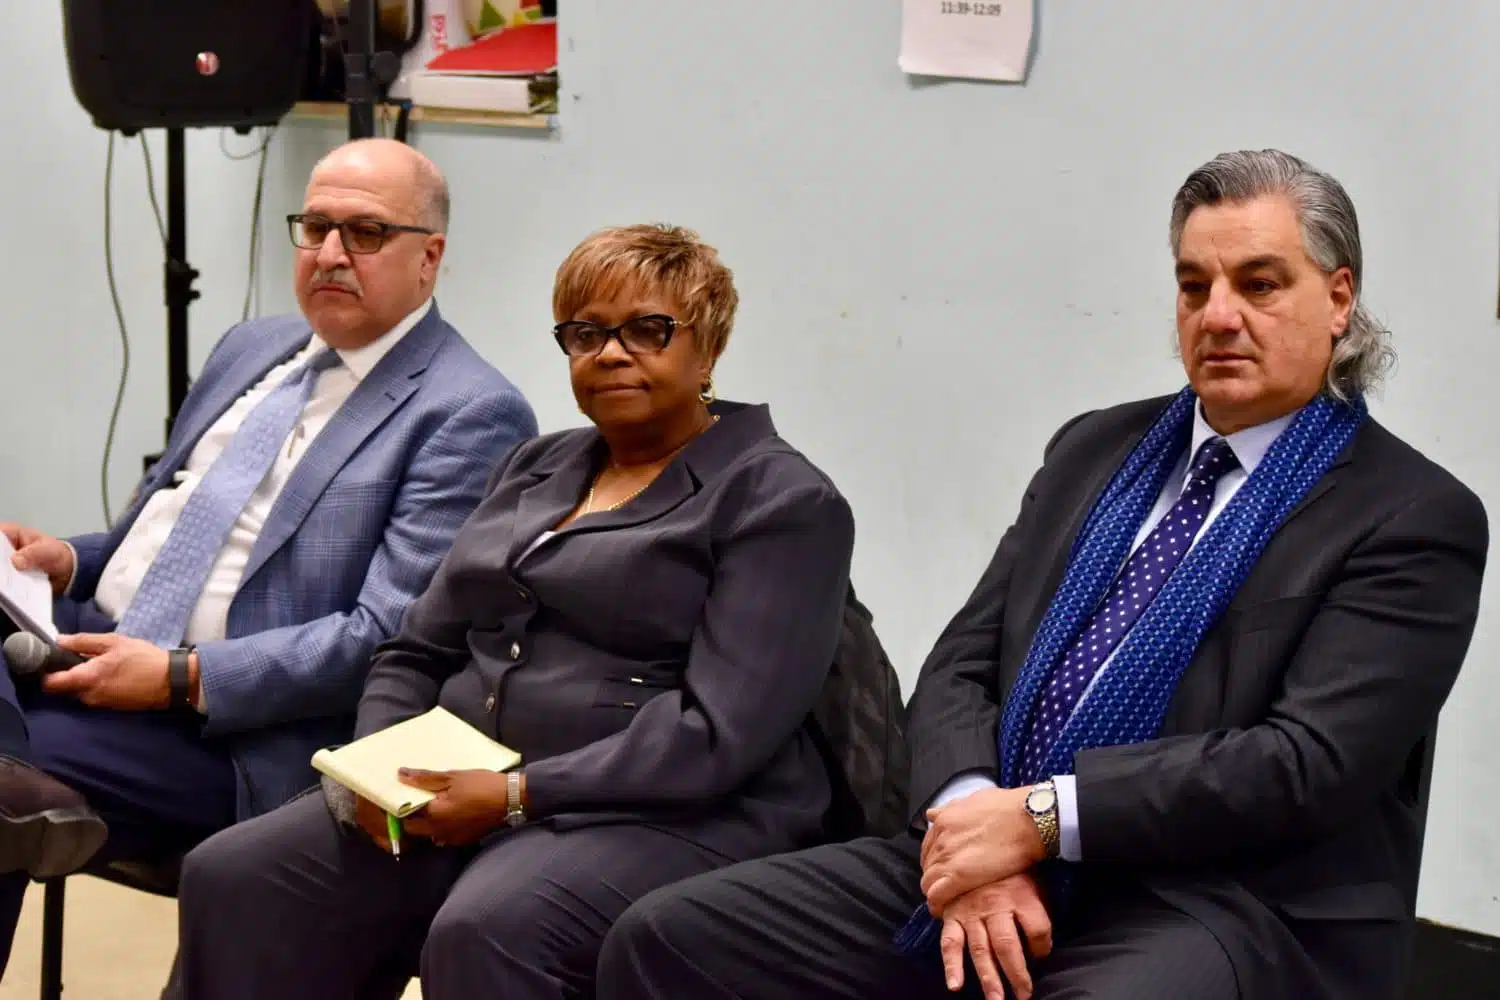 West Broadway Neighborhood Association holds ‘town hall’ with elected legislators